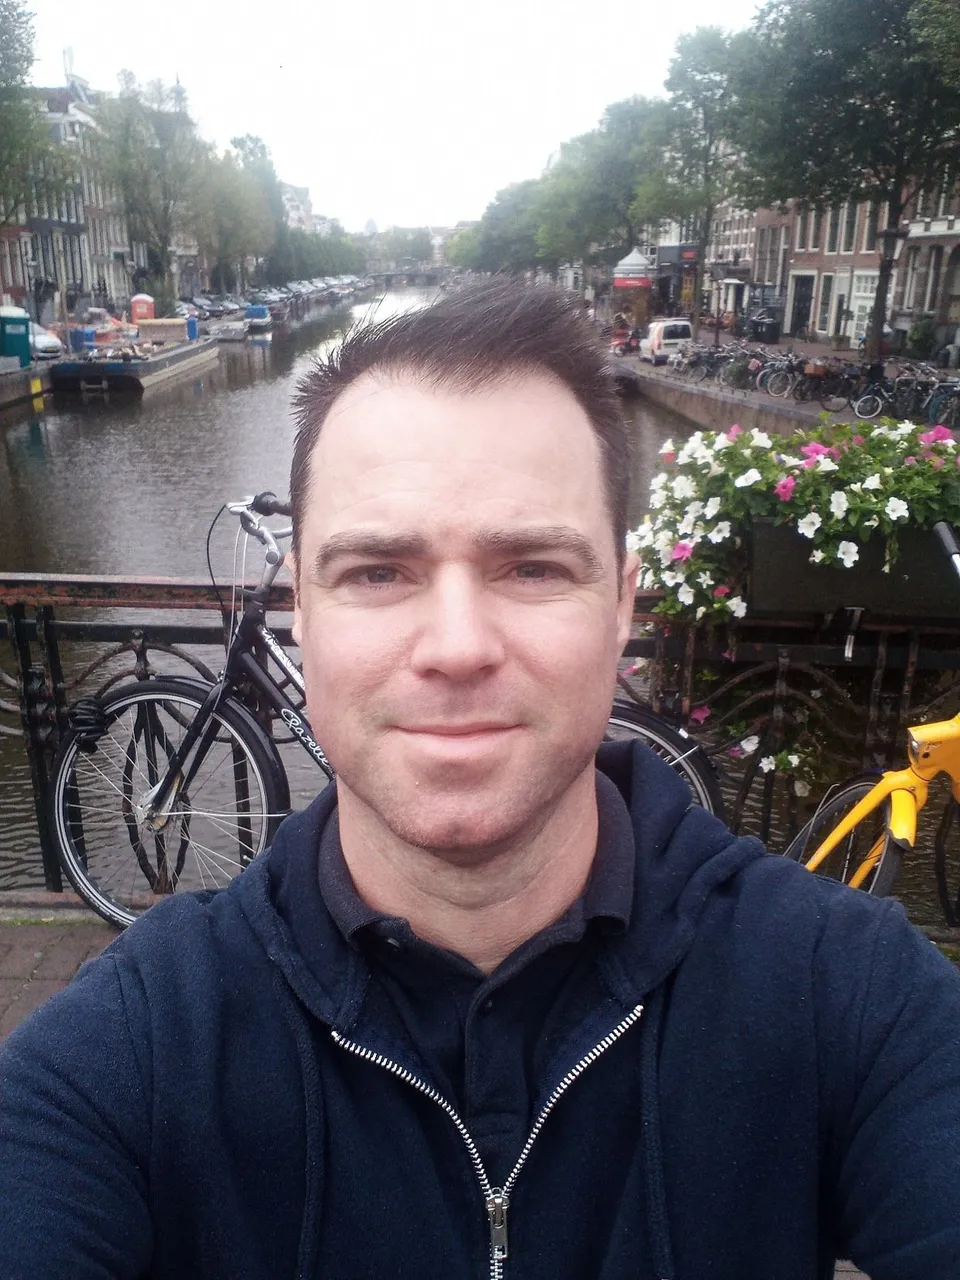 hivefest-selfie-amsterdam.jpeg